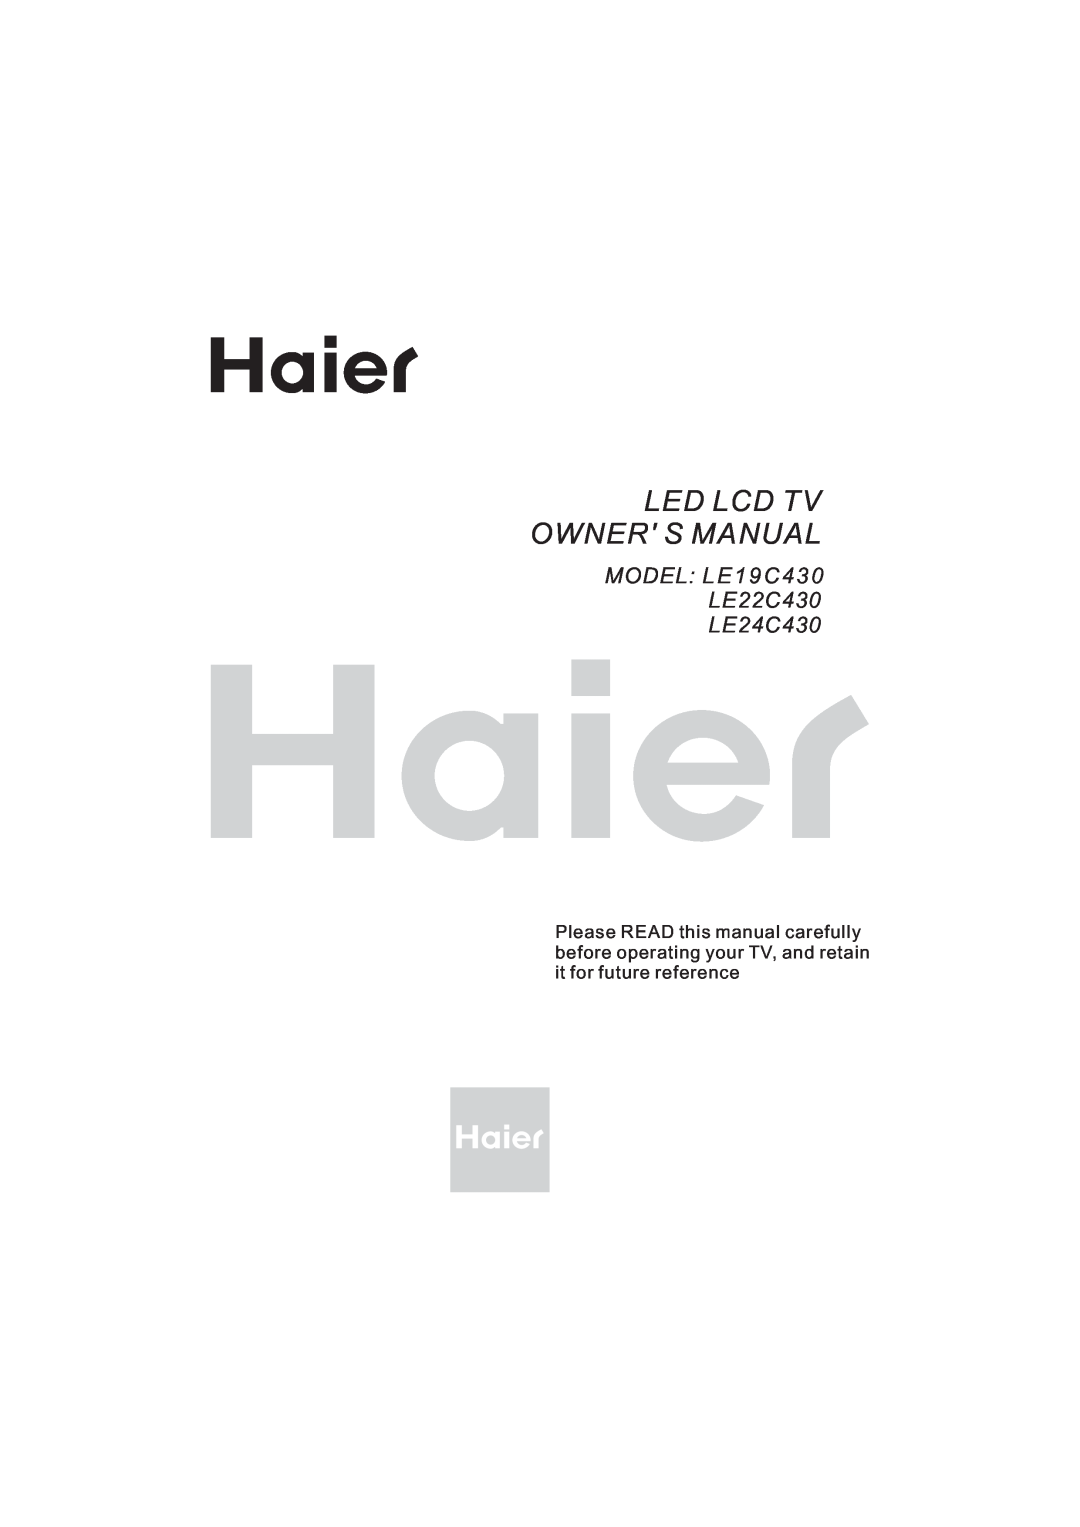 Haier owner manual MODEL LE19C430 LE22C430 LE24C430, Led Lcd Tv Owner S Manual 